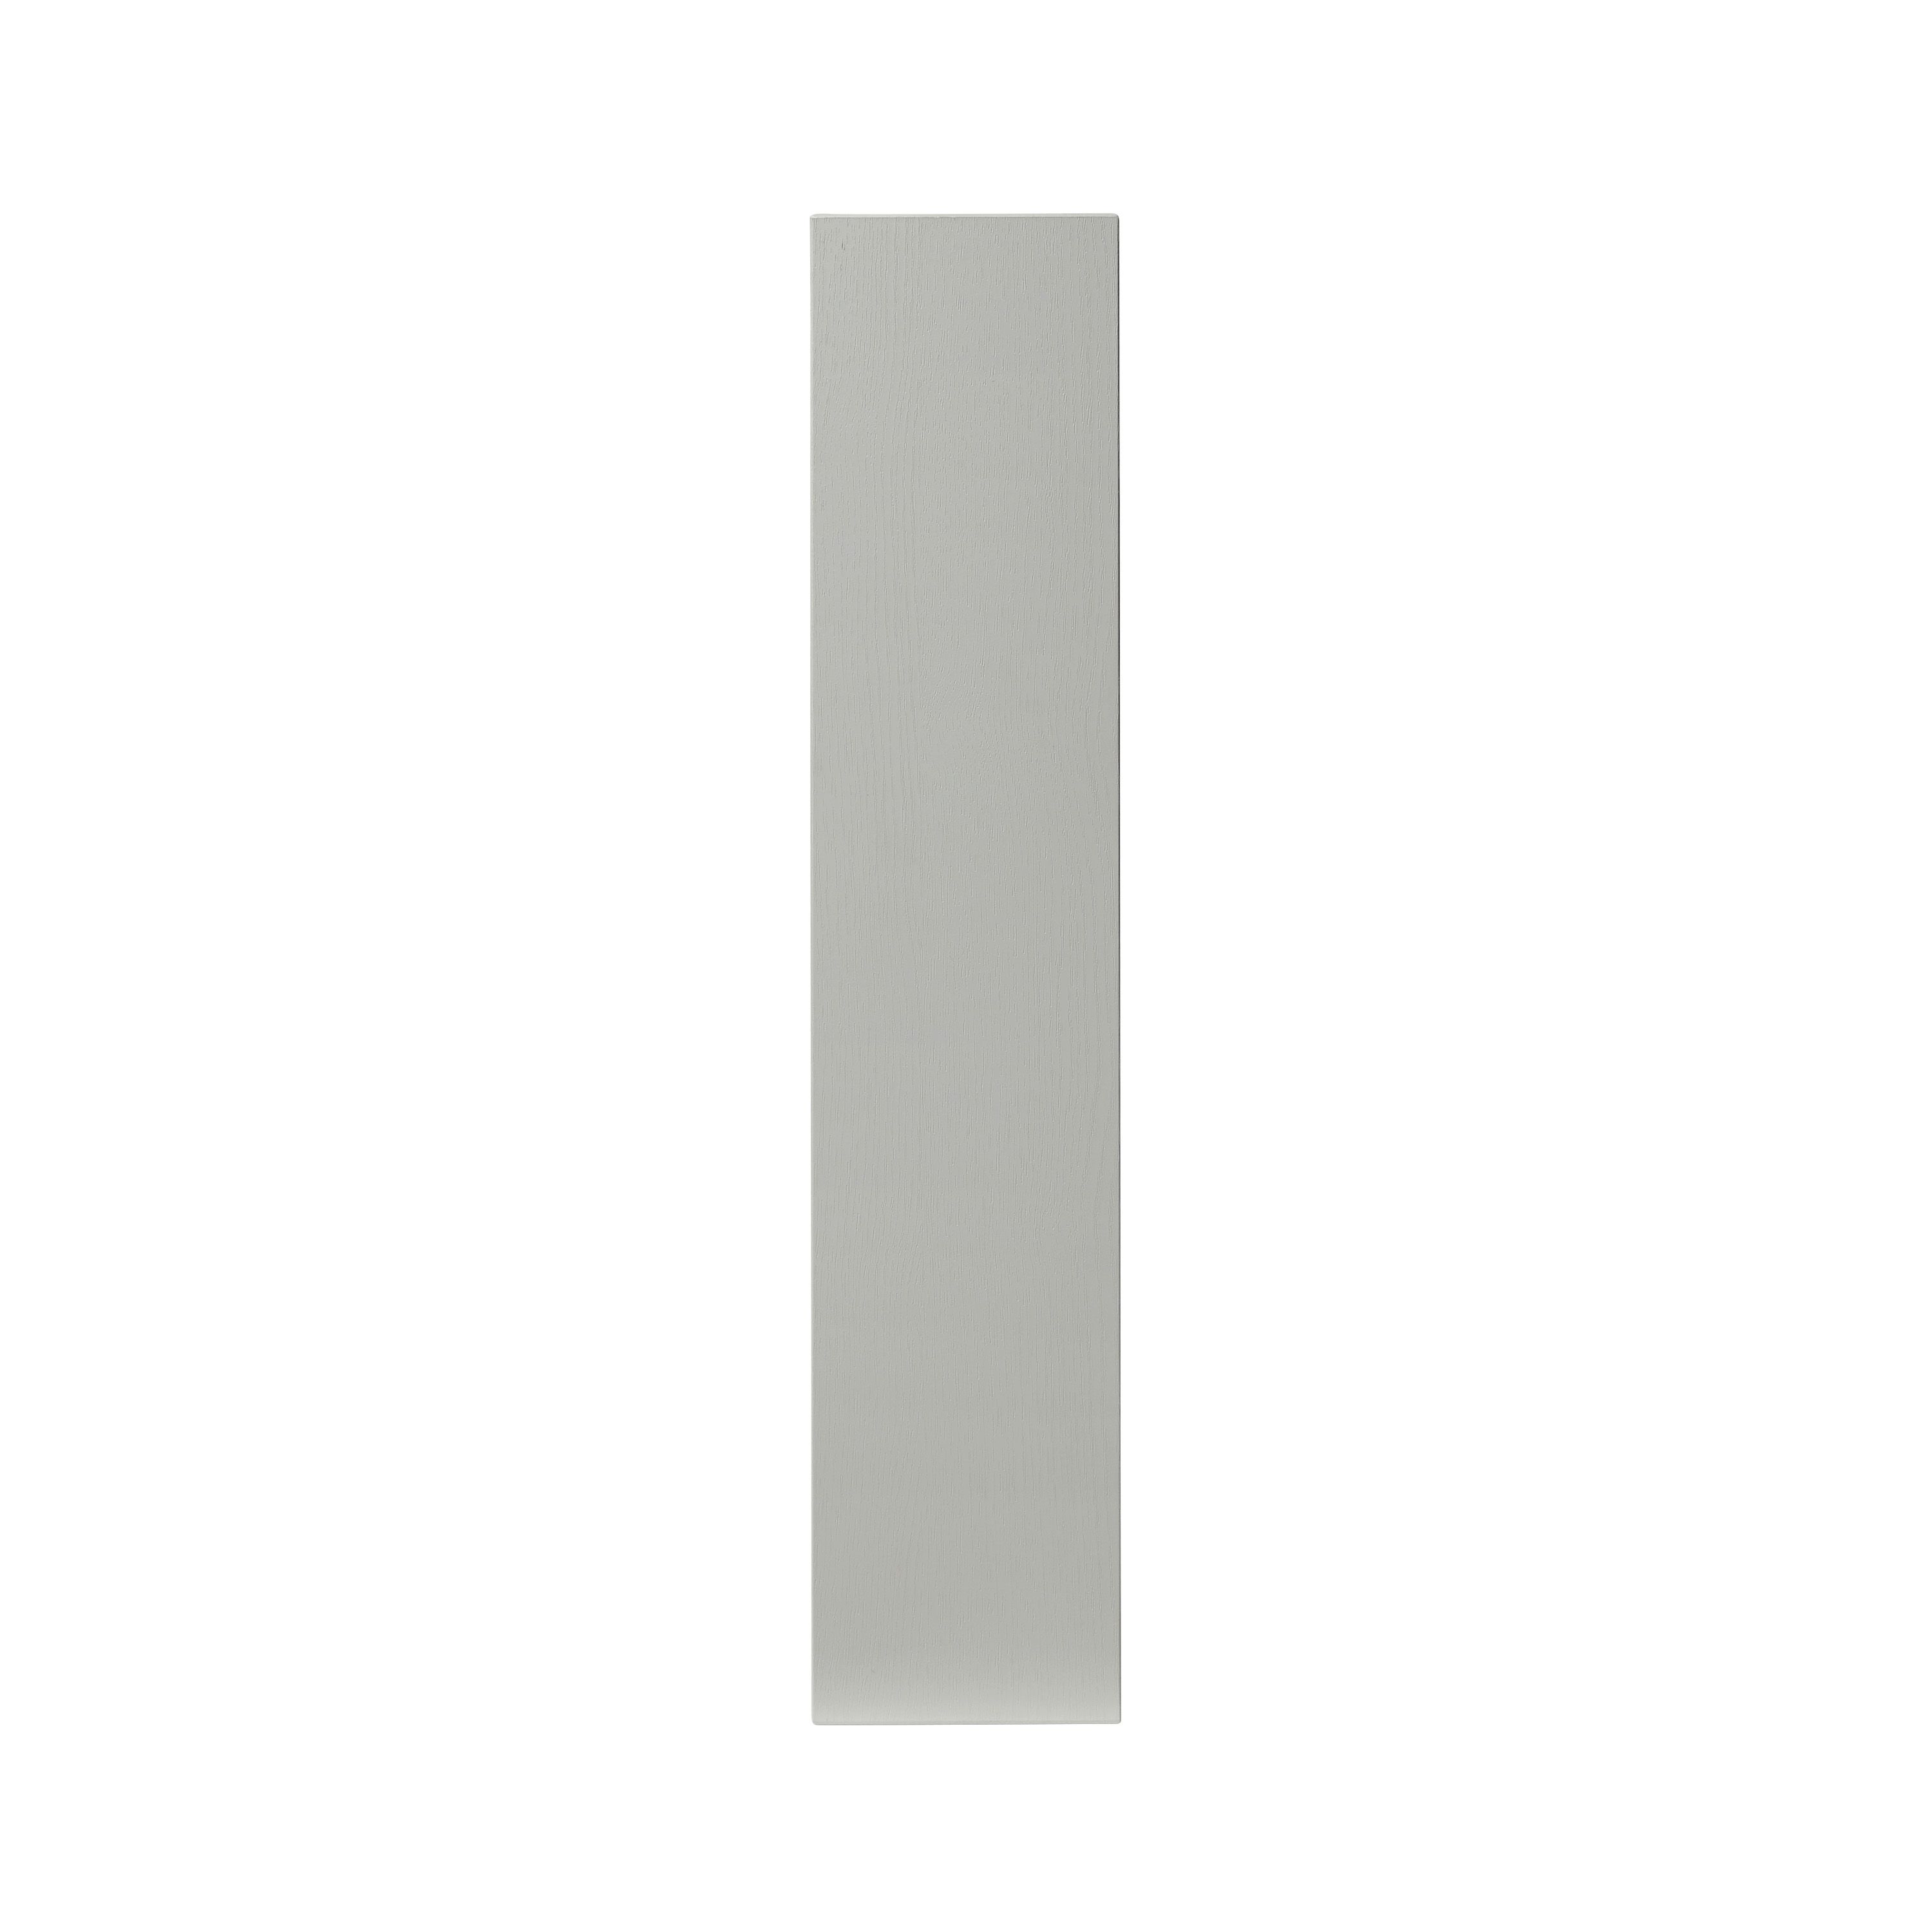 GoodHome Alpinia Matt grey painted wood effect shaker Highline Cabinet door (W)150mm (H)715mm (T)18mm